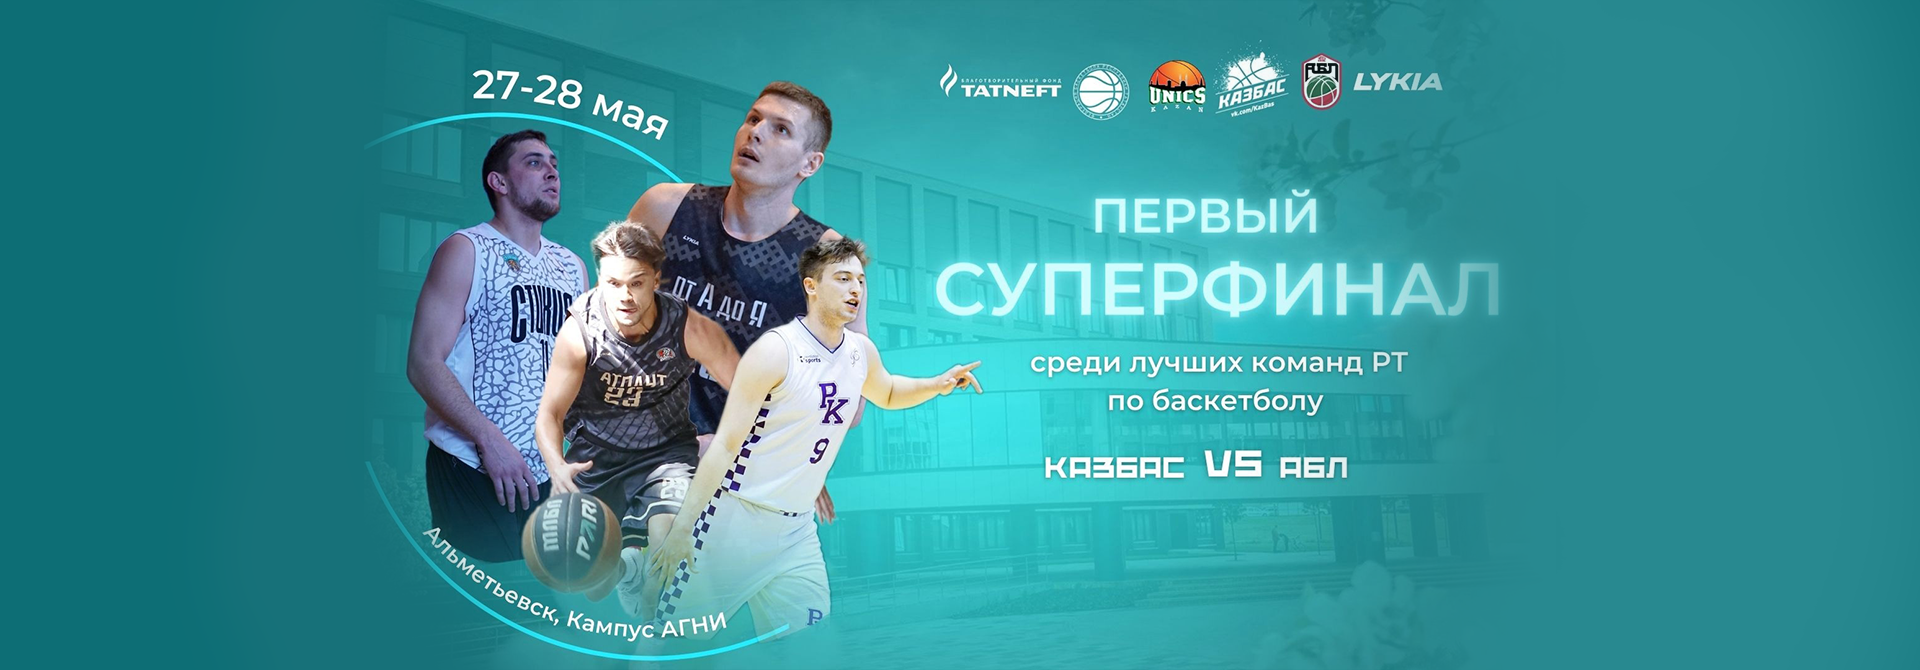 УНИКС поддержал Суперфинал лучших команд по баскетболу 